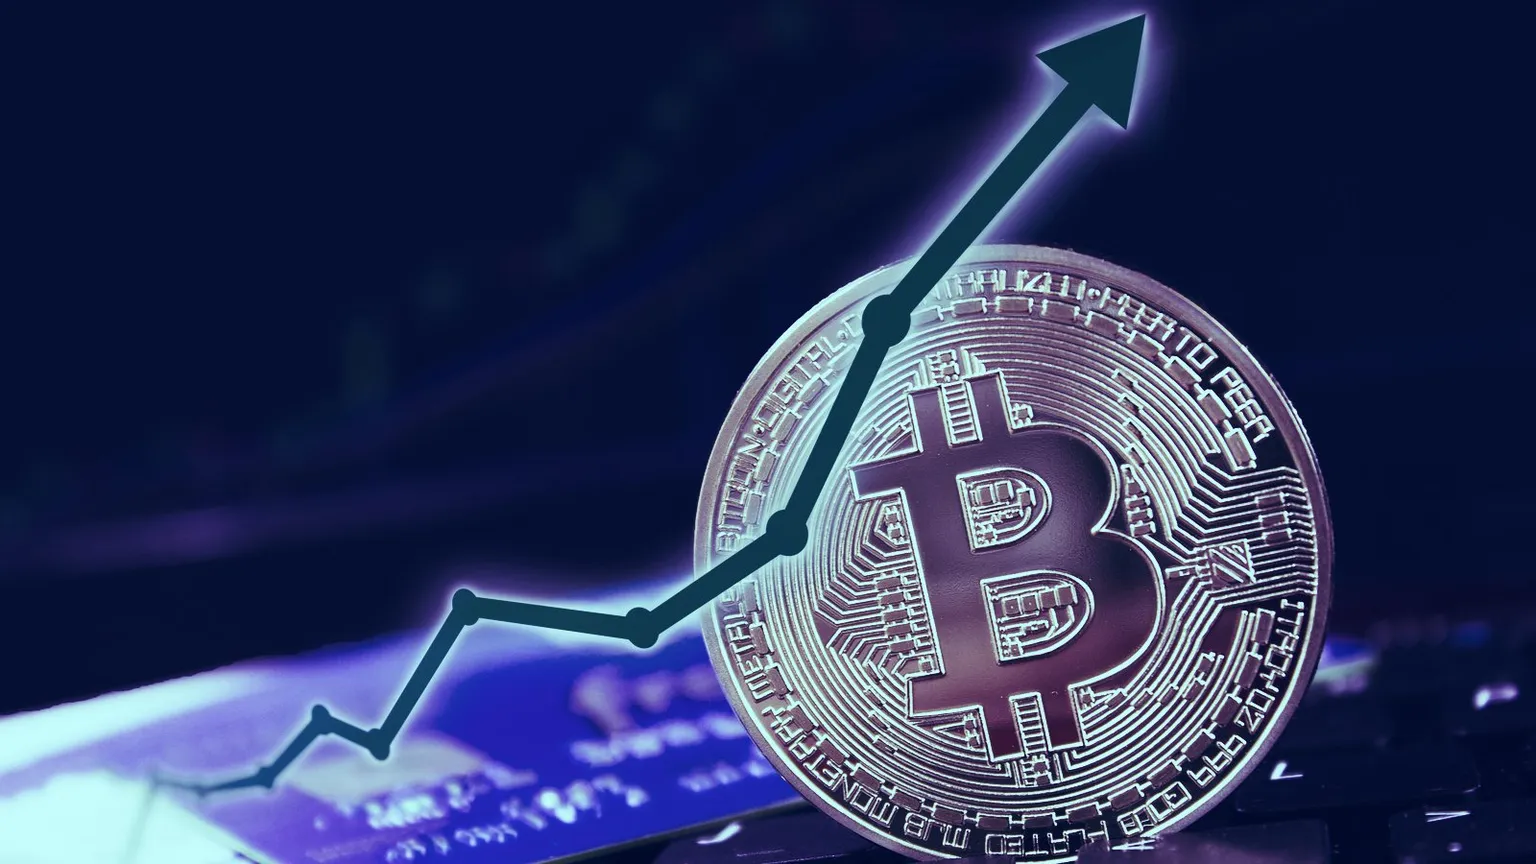 Bitcoin's price. Image: Shutterstock